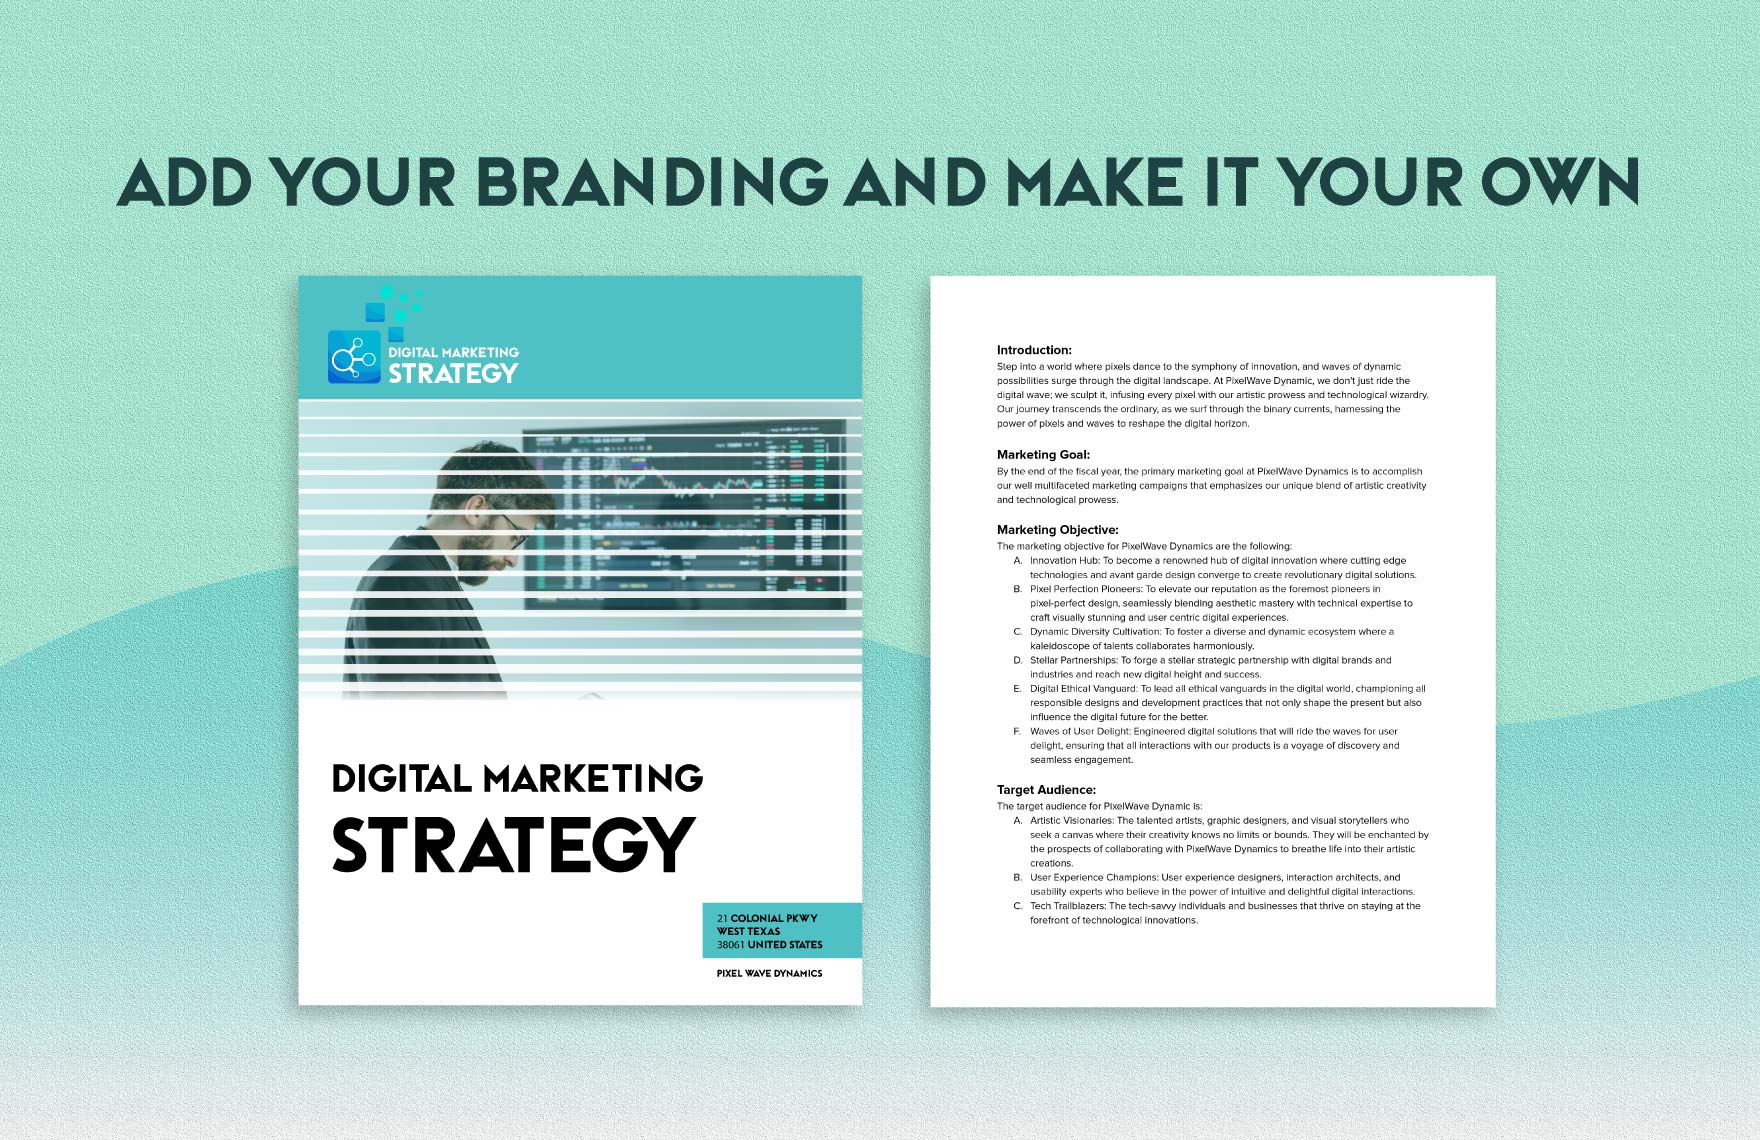  Digital Marketing Strategy